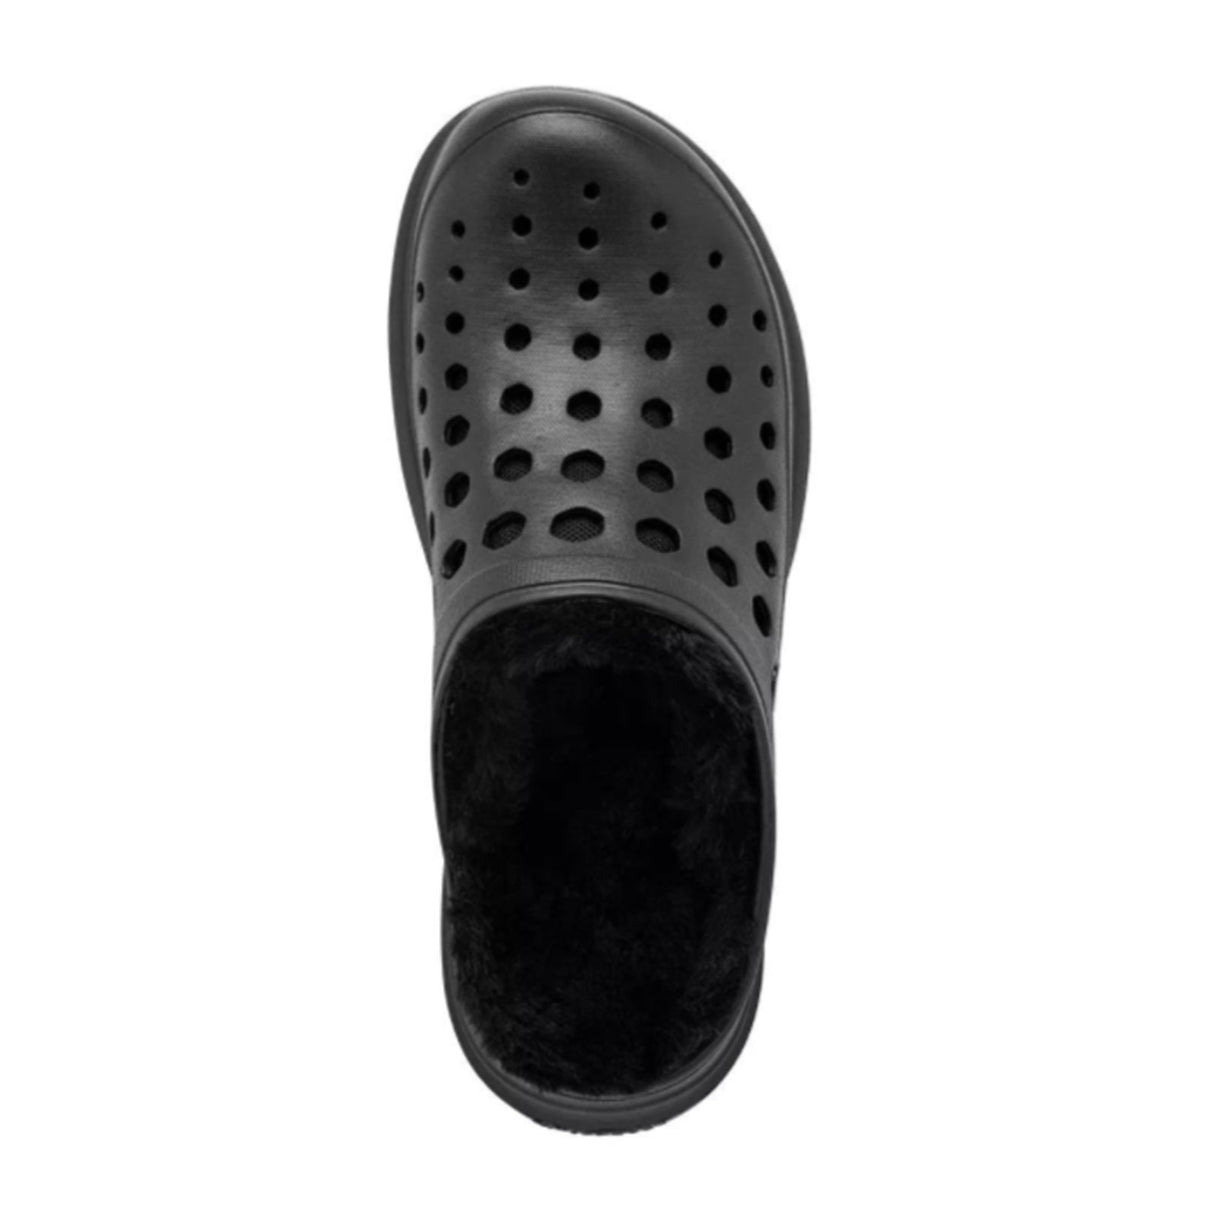 Joybees Cozy Lined Clog (Unisex) - Black/Black Sandals - Clog - The Heel Shoe Fitters